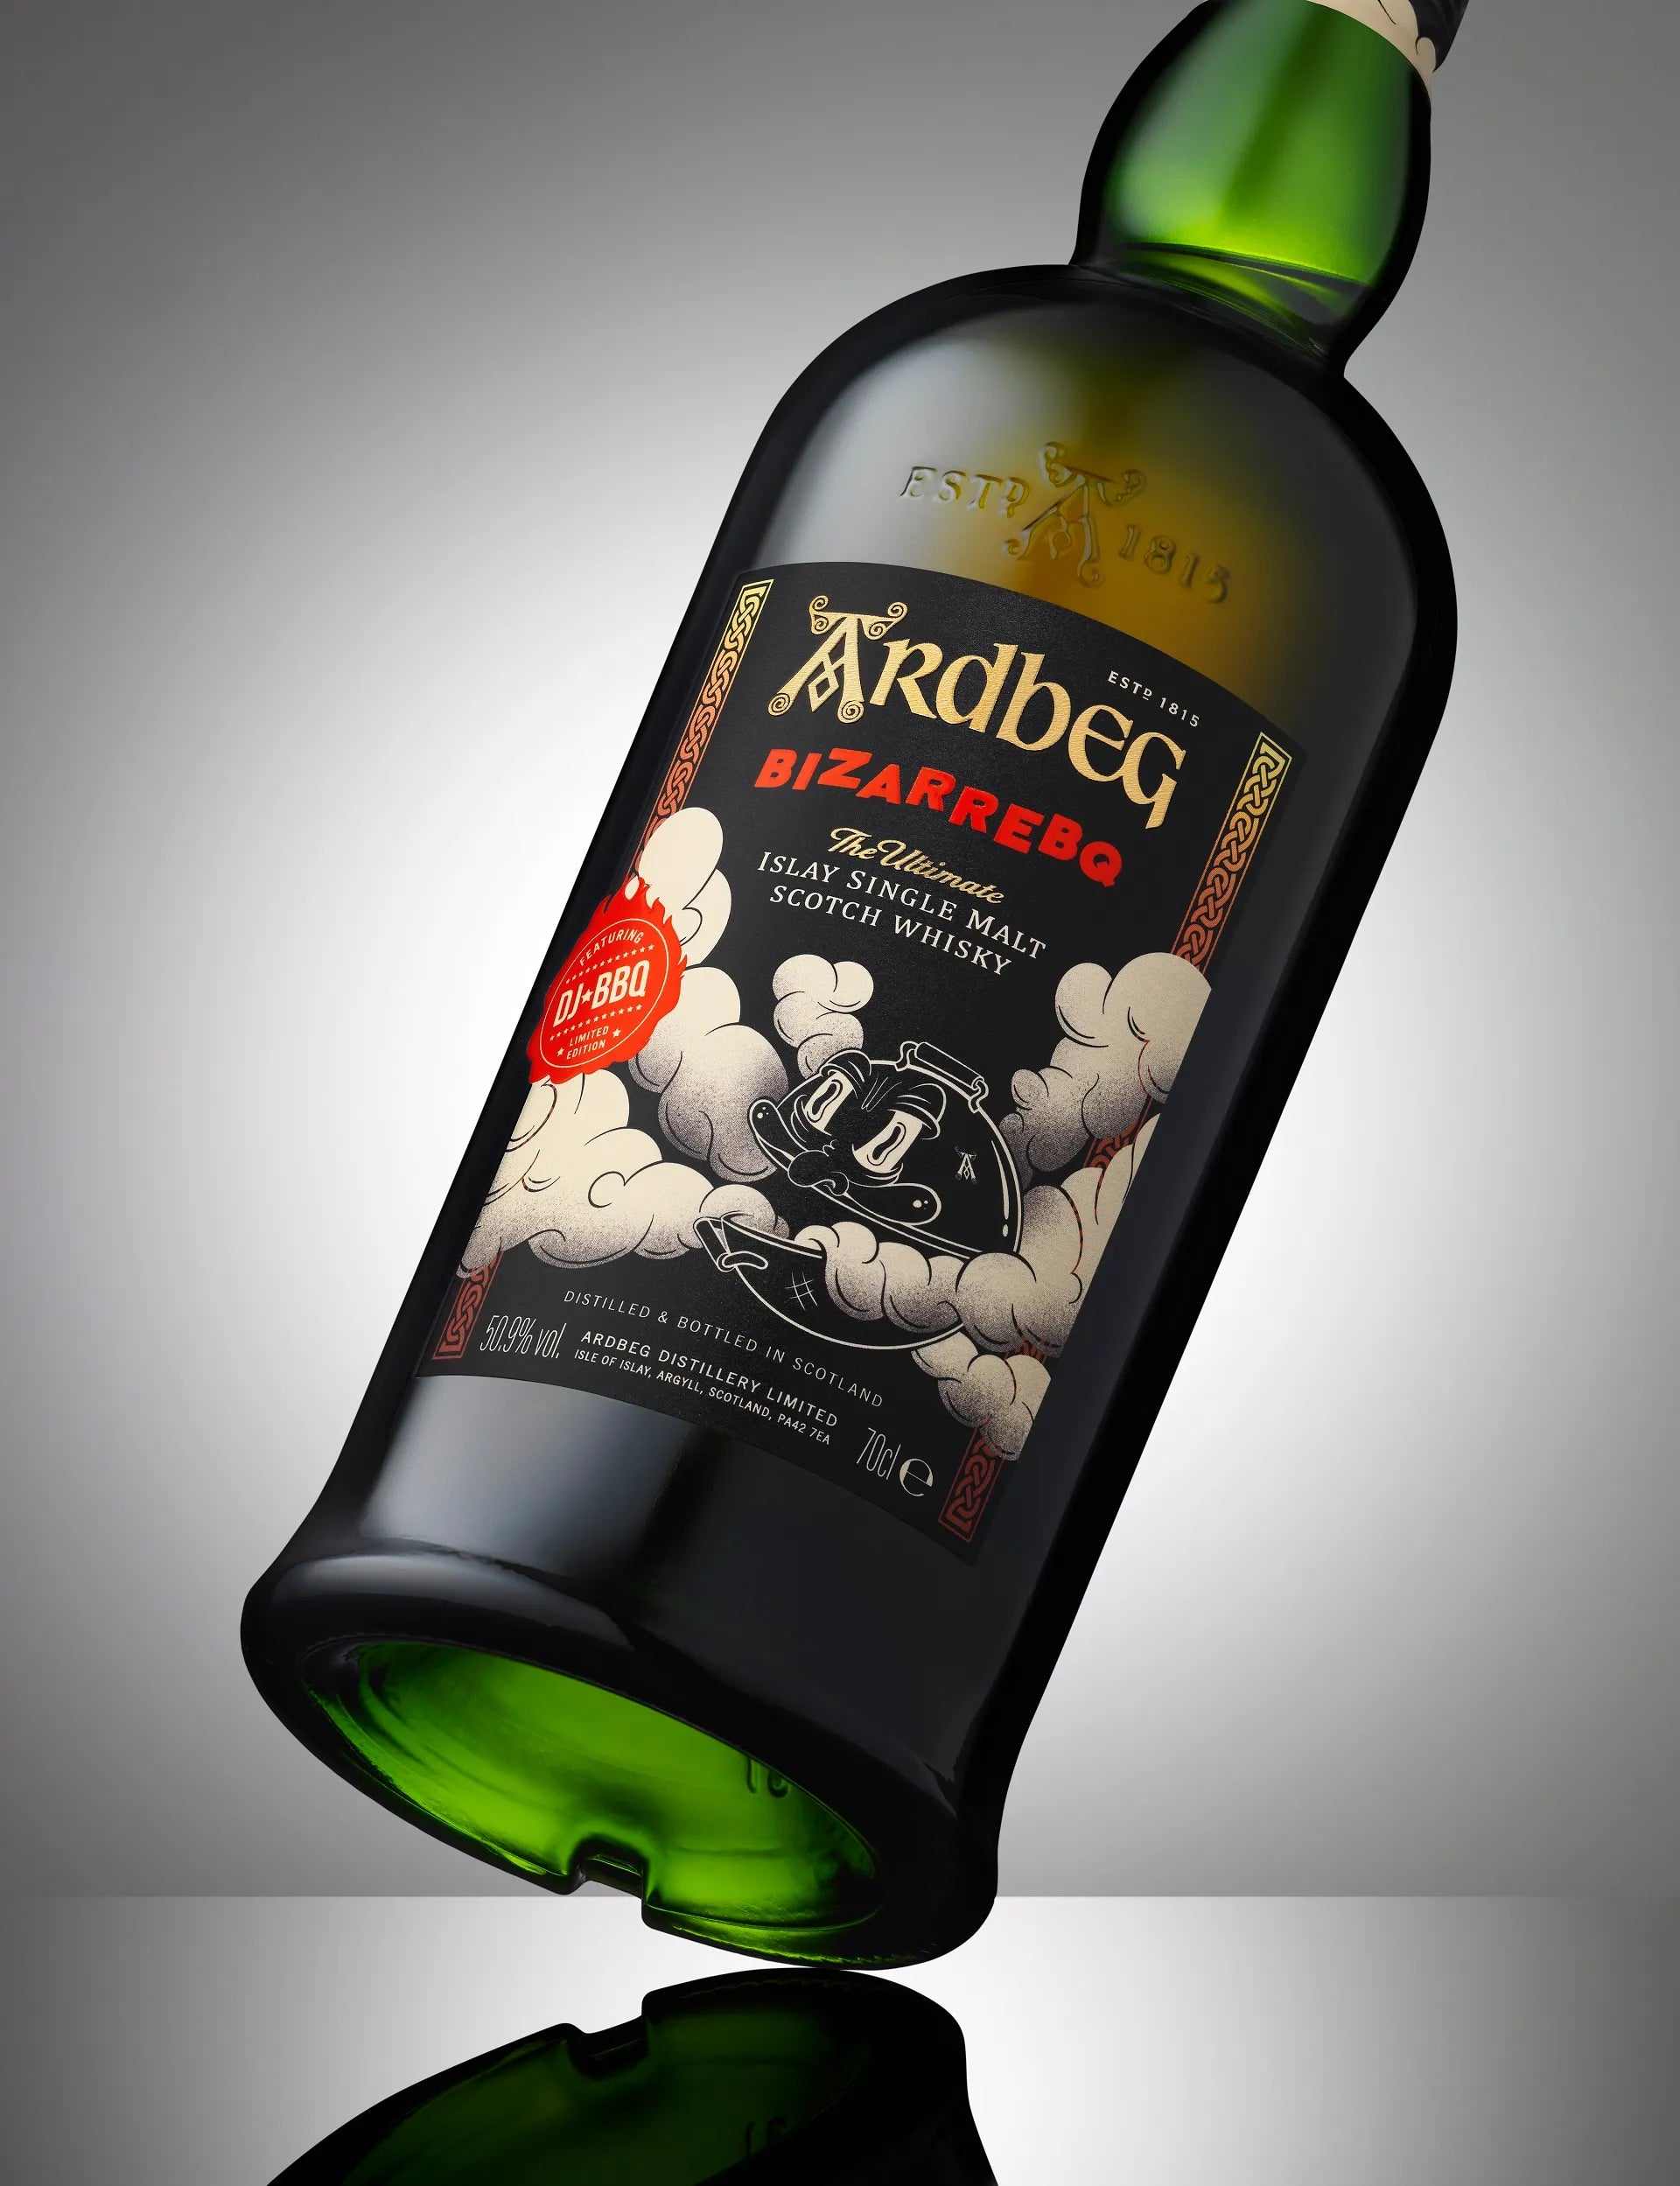 Ardbeg BizarreBQ Single Malt Scotch (Limited Edition)